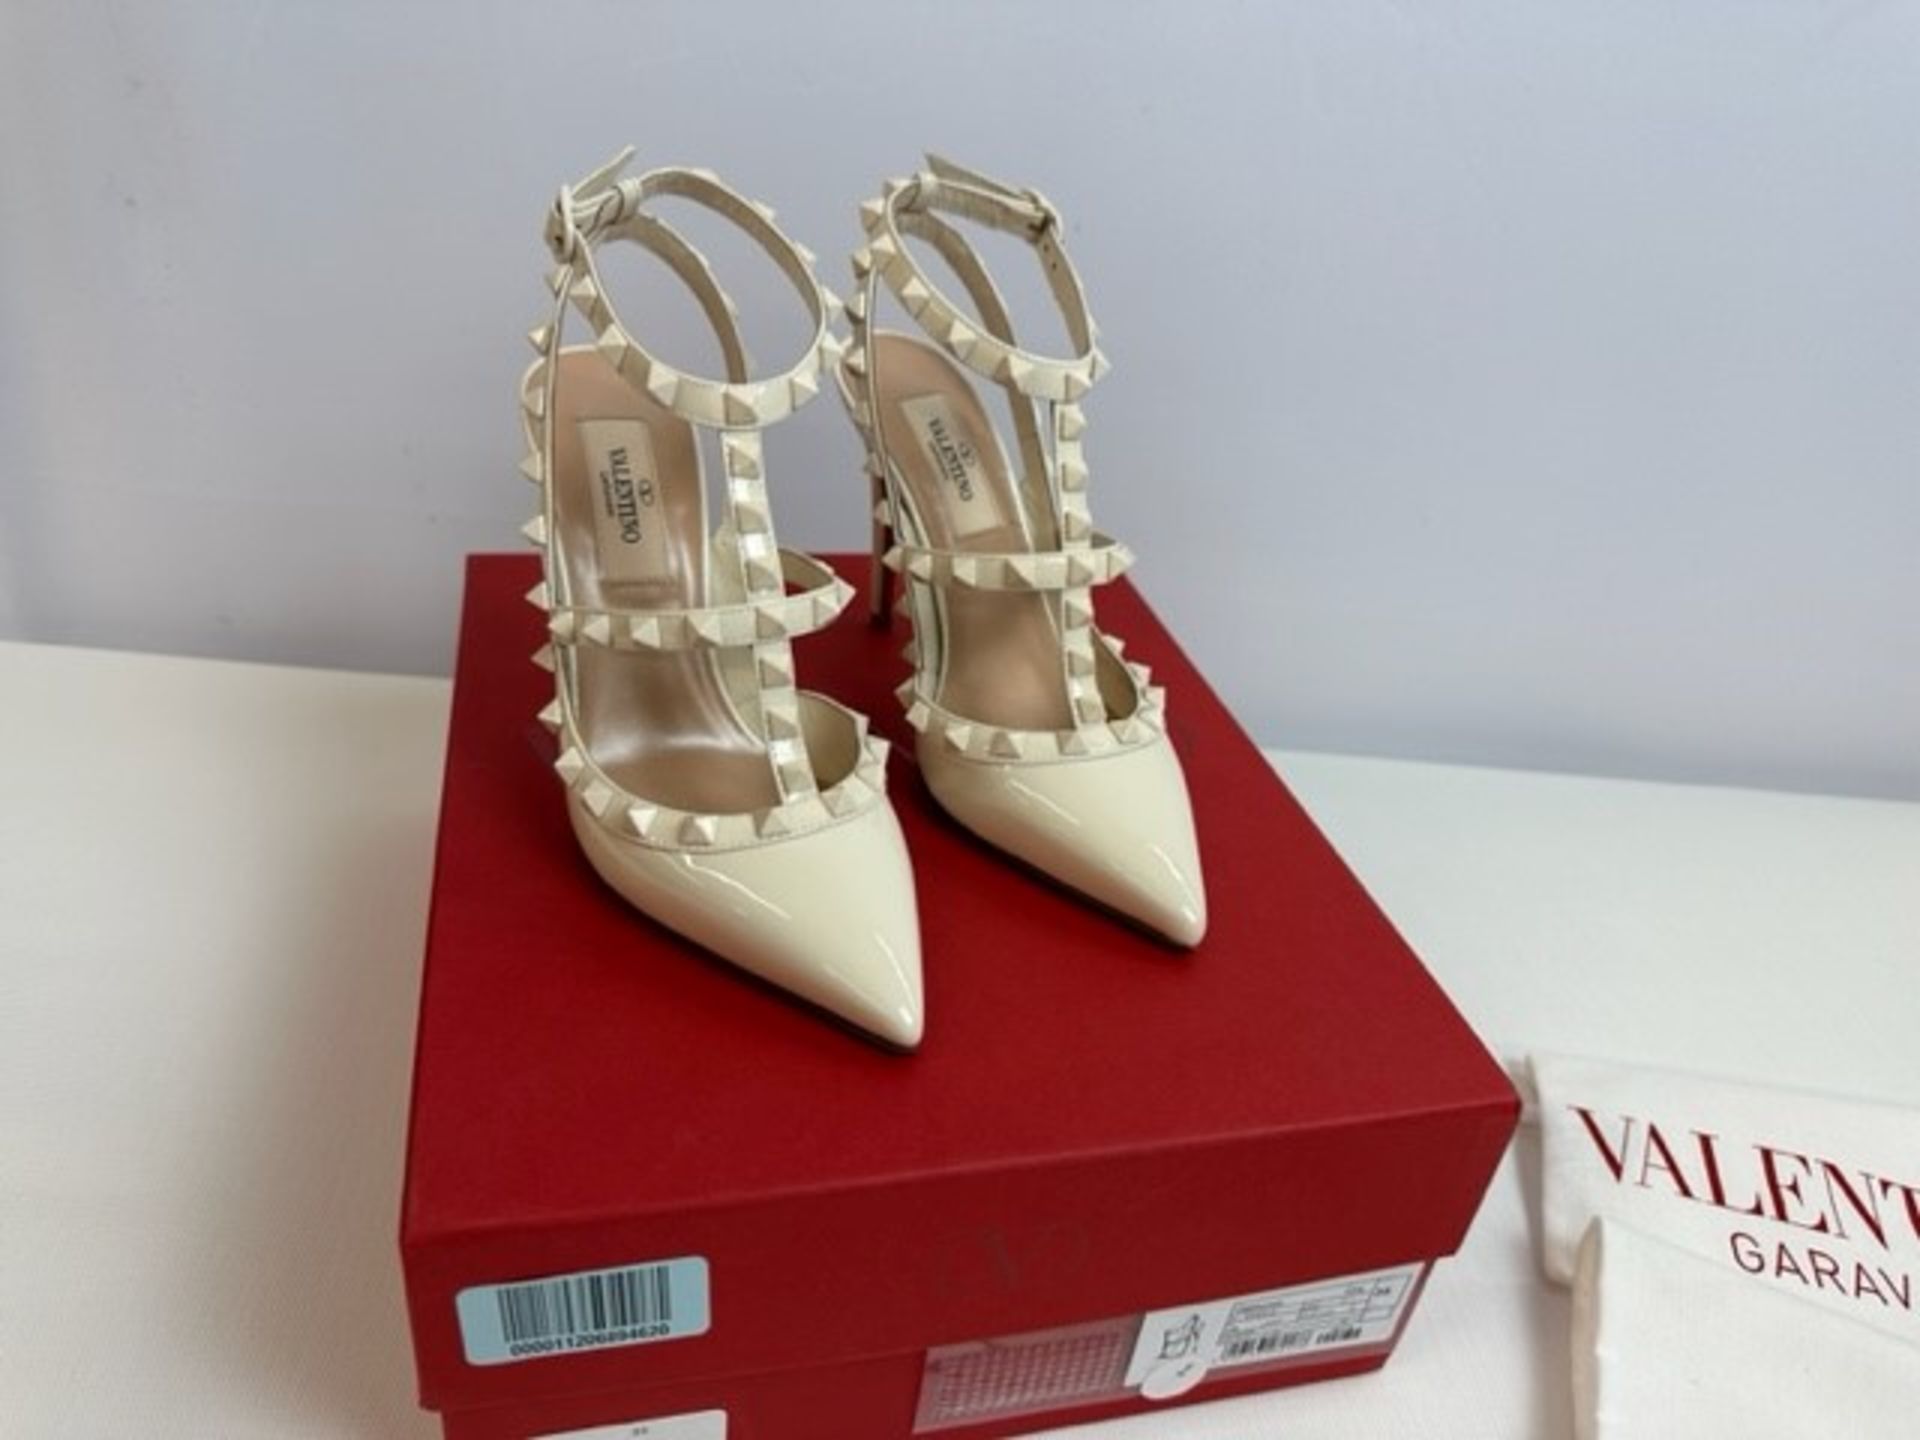 Valentino Garavani Pump Rockstud Ankle Pump Heel Size: 35, Color: White, Retail Price: $1100 - Image 2 of 5